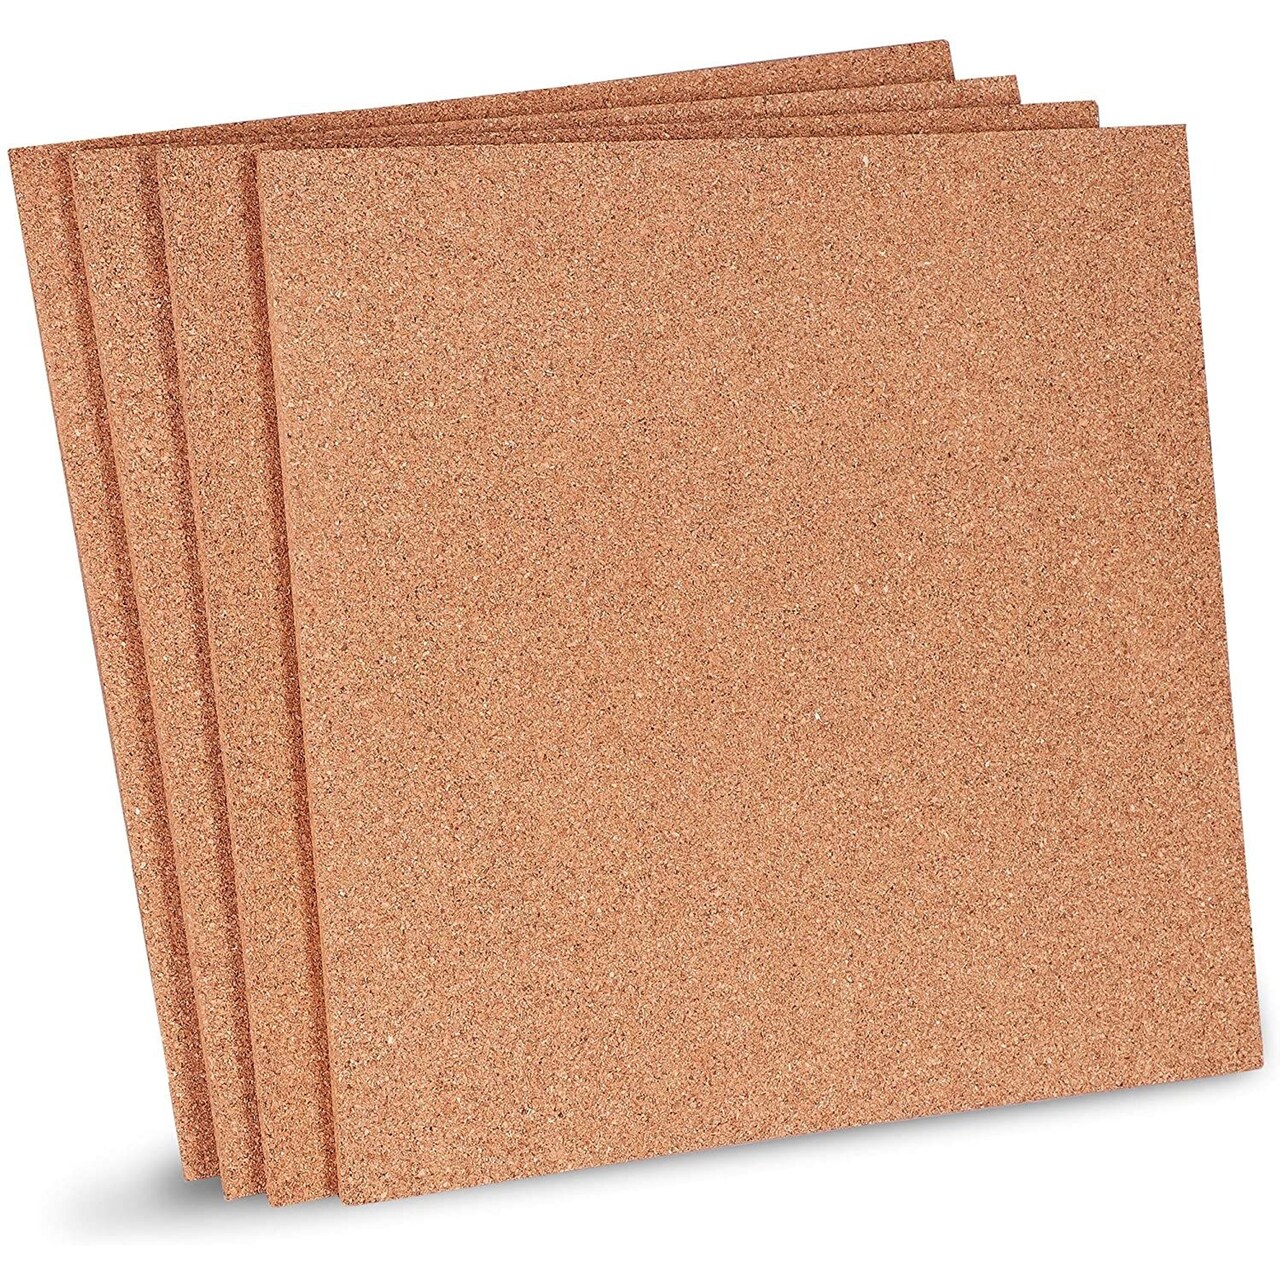 4-Pack Cork Board Tiles, 1/4-Inch Natural Square Cork board Tiles